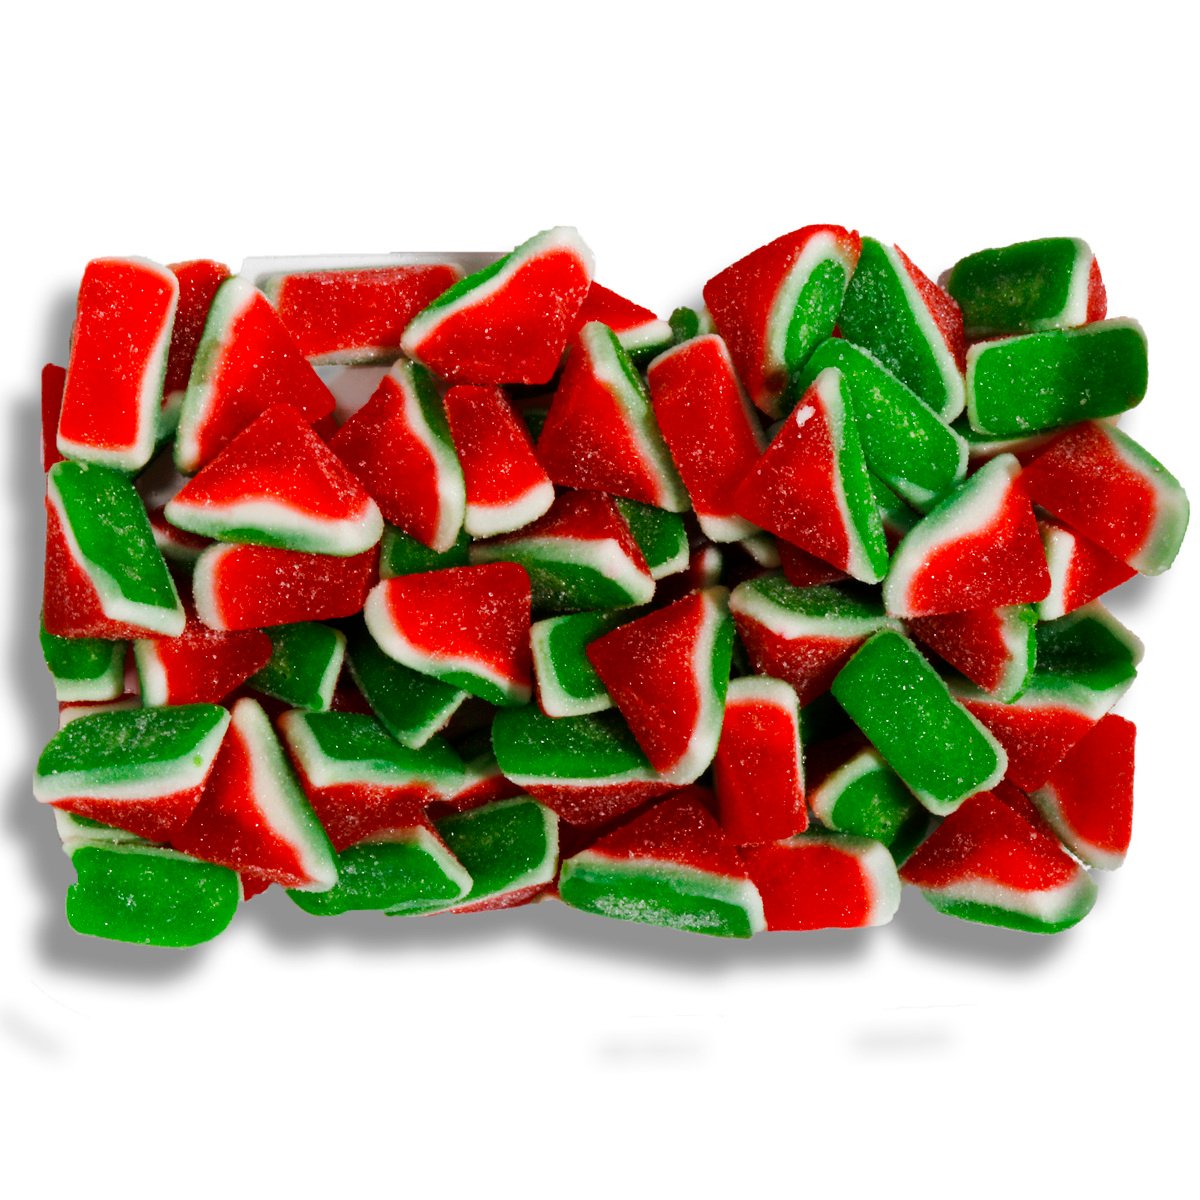 Crayola Watermelon Slices Sweet & Juicy 16 oz